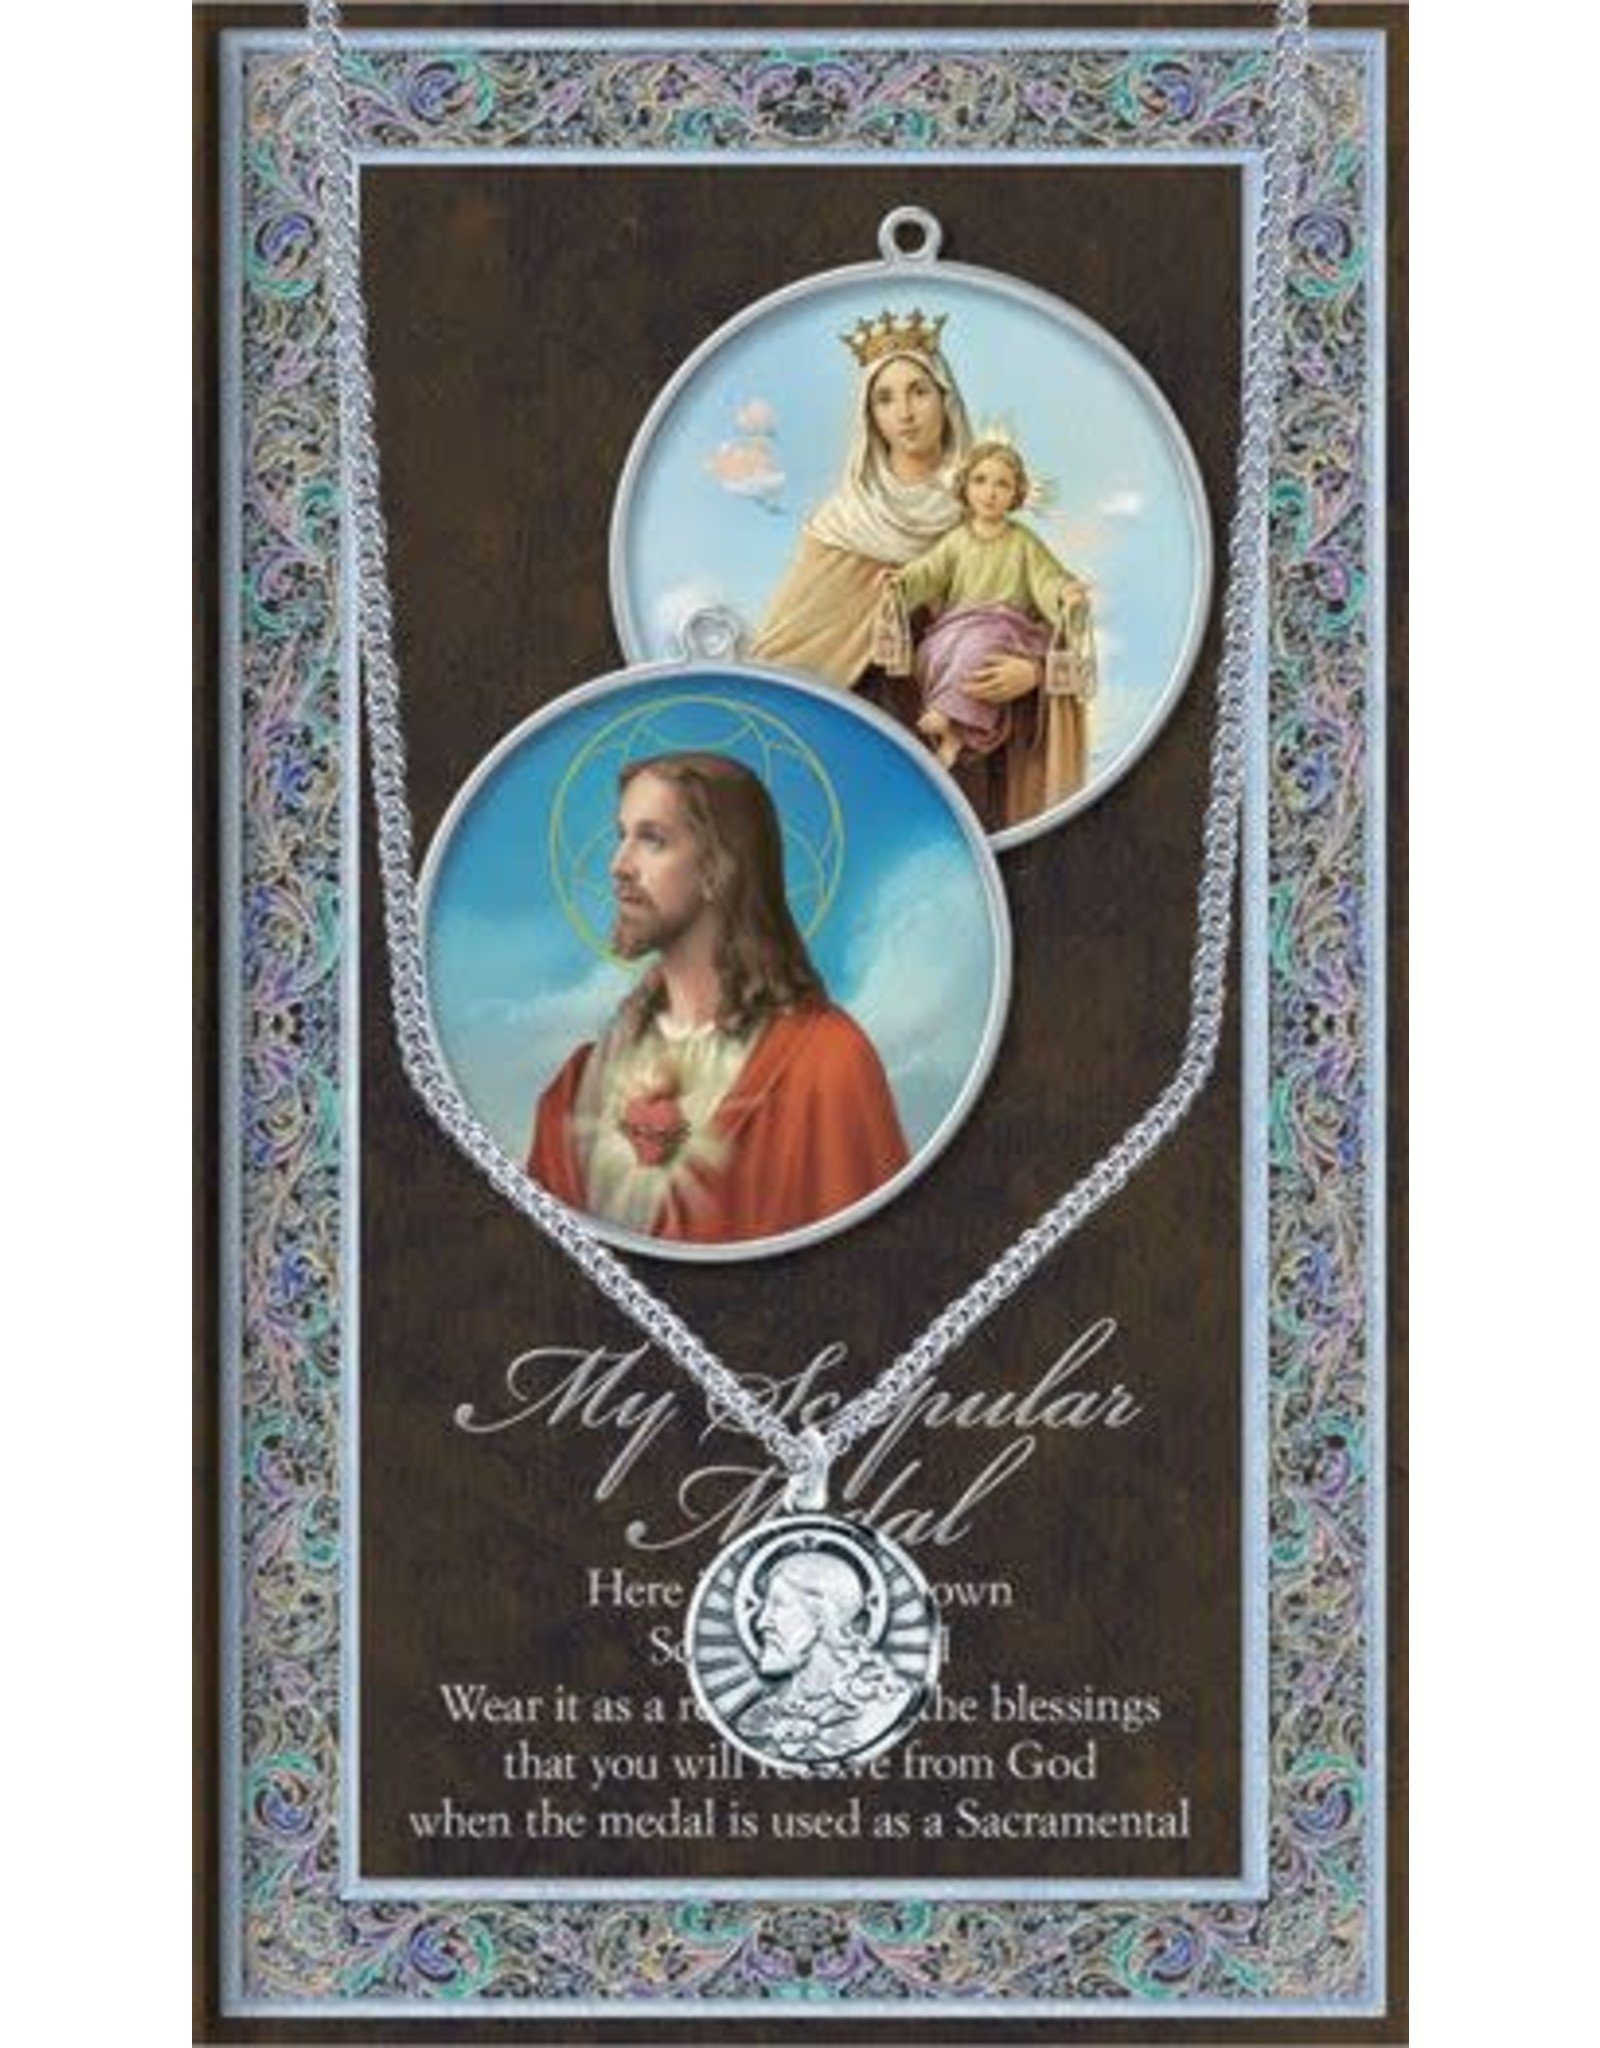 Hirten Medal with Prayer Card - My Scapular